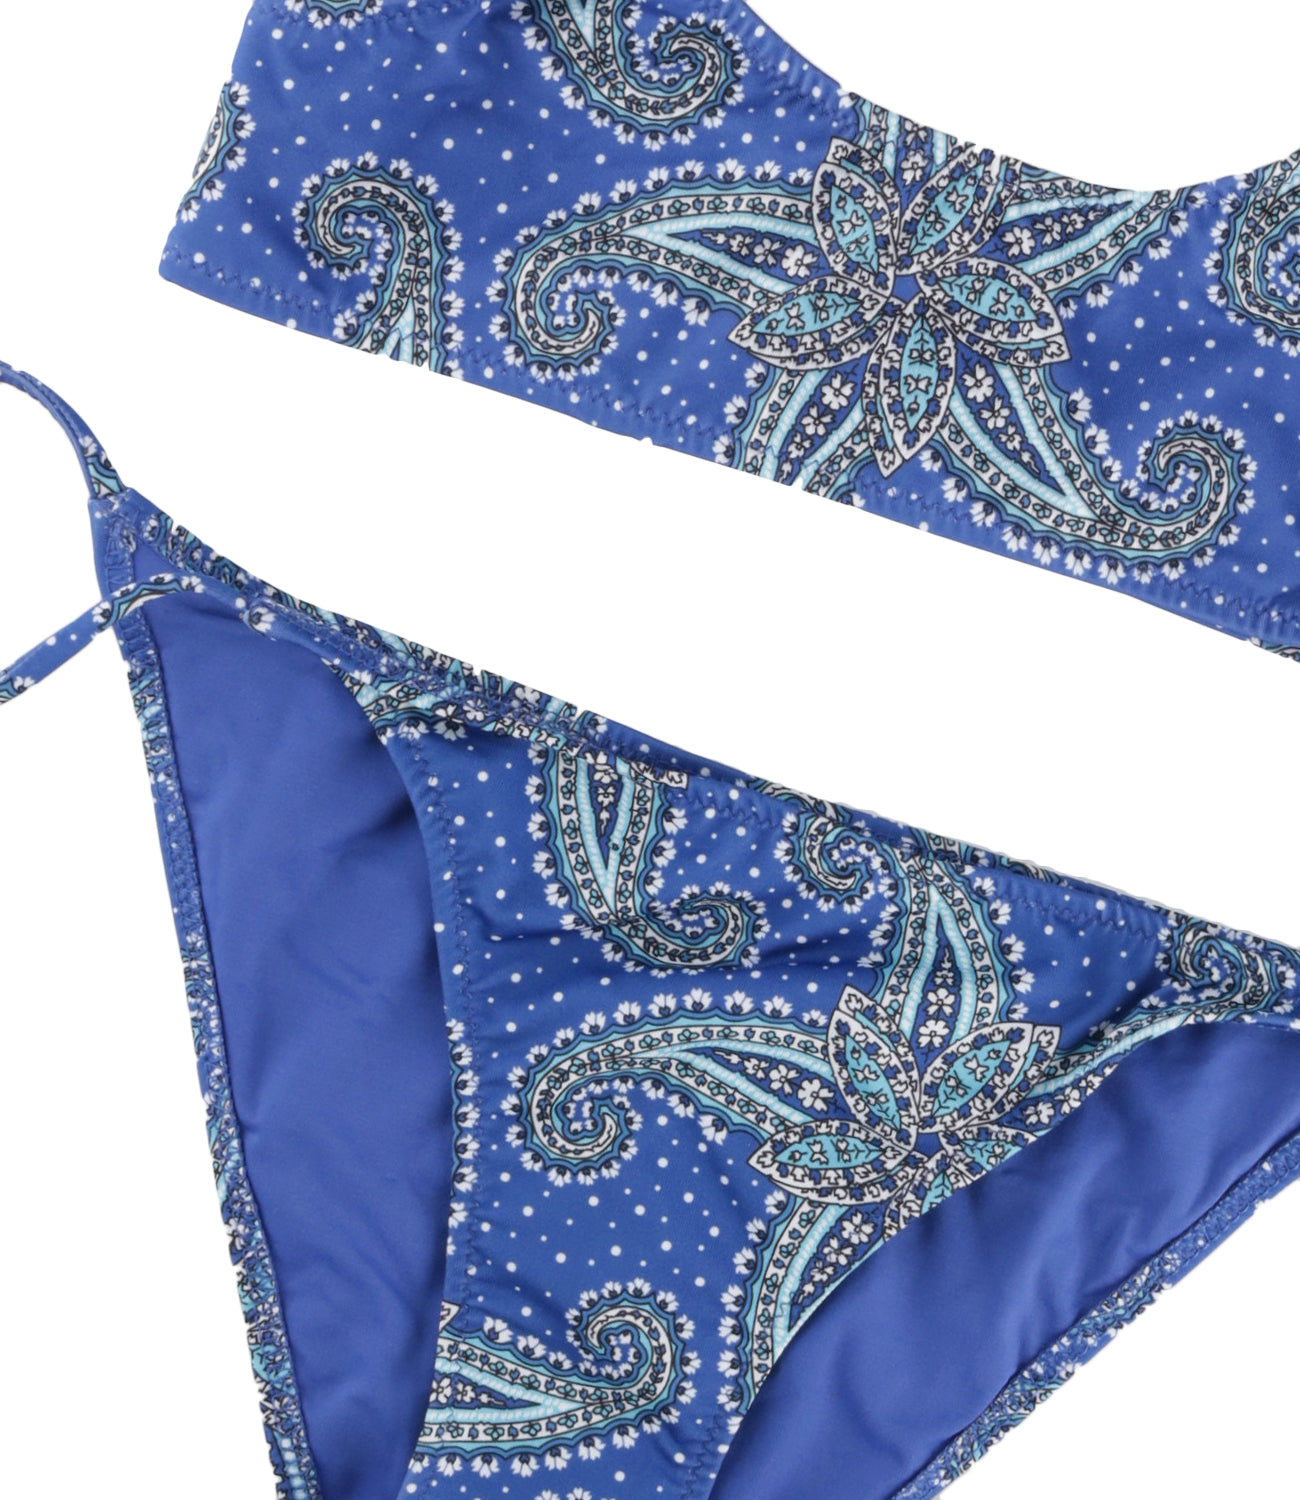 MC2 Saint Barth Kids | Blue and Light Blue Bikini Swimsuit